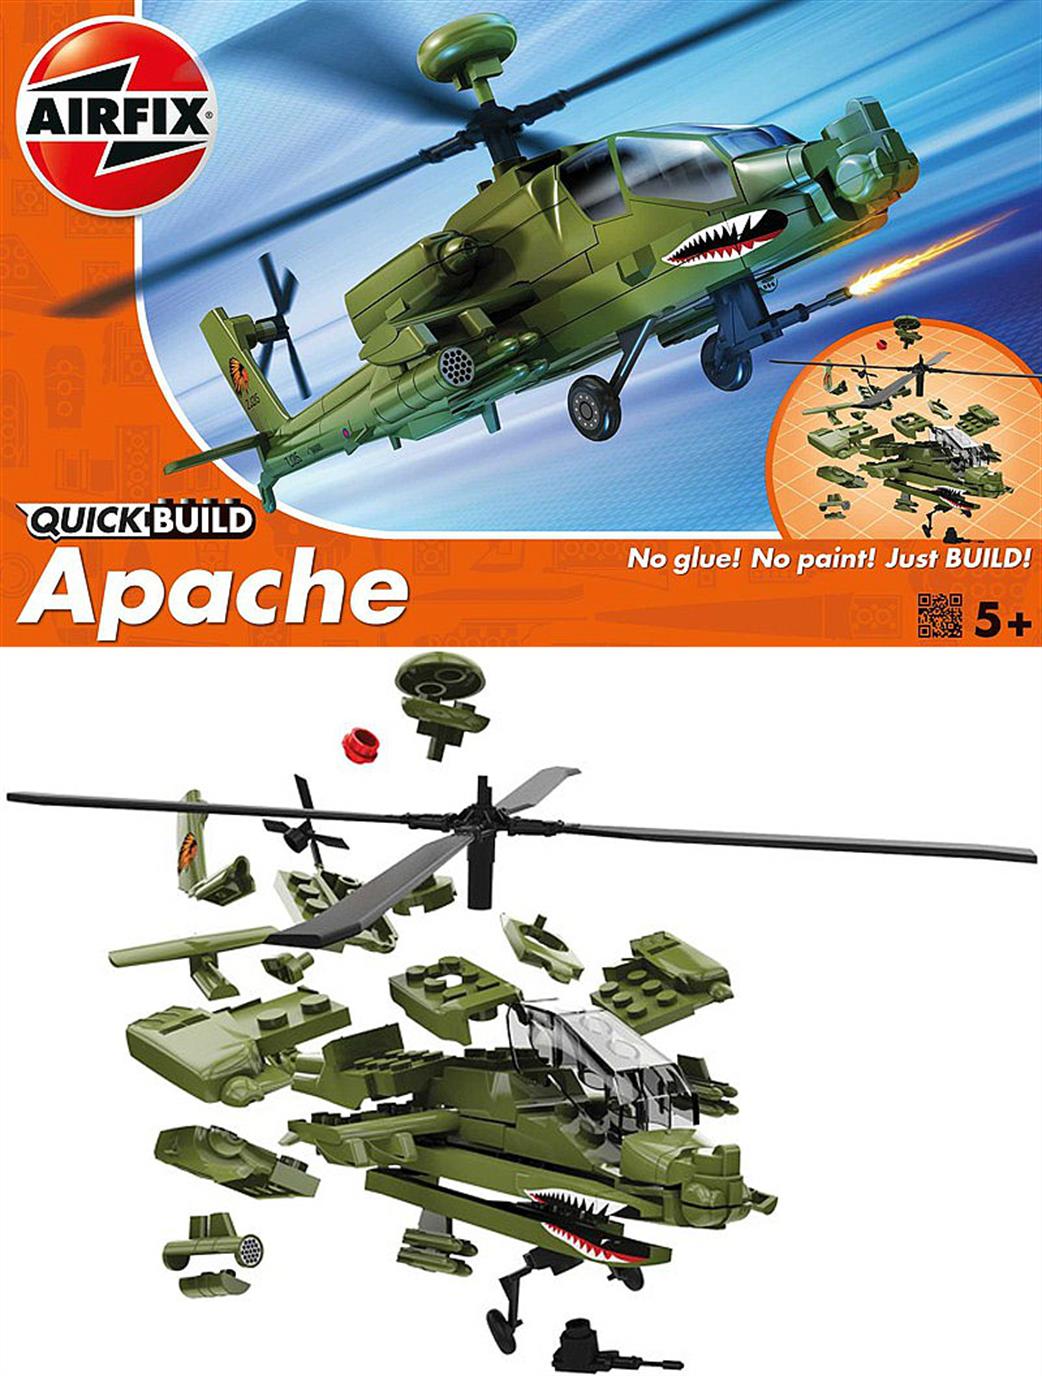 Airfix  J6004 Quickbuild Apache Helicopter Clip together Block Model